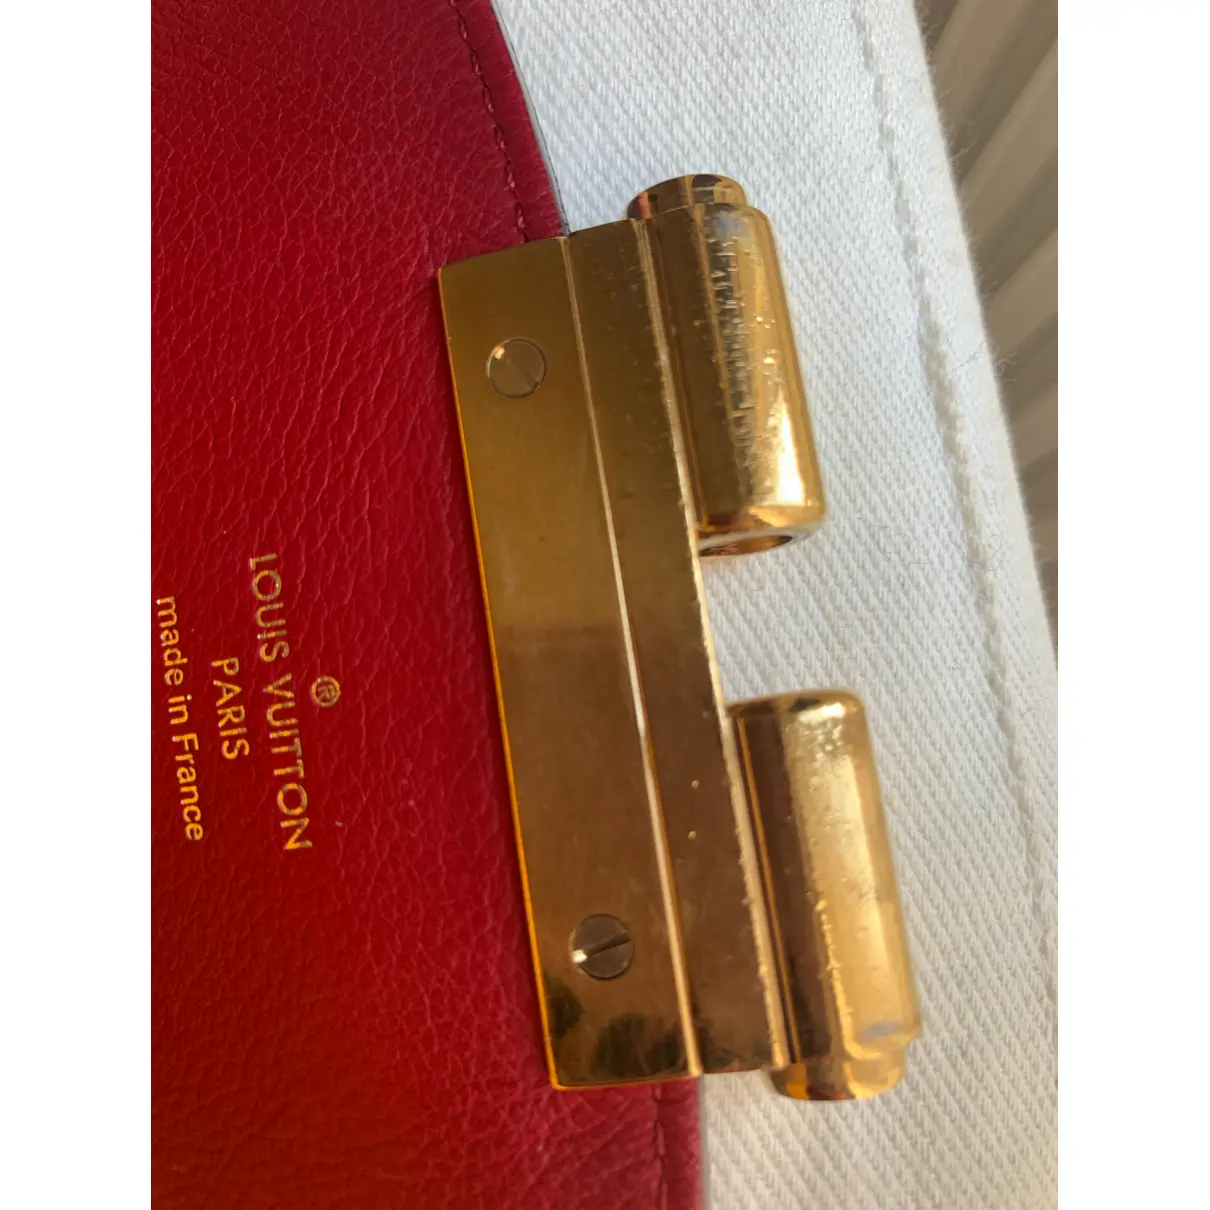 Buy Louis Vuitton Olympe cloth handbag online